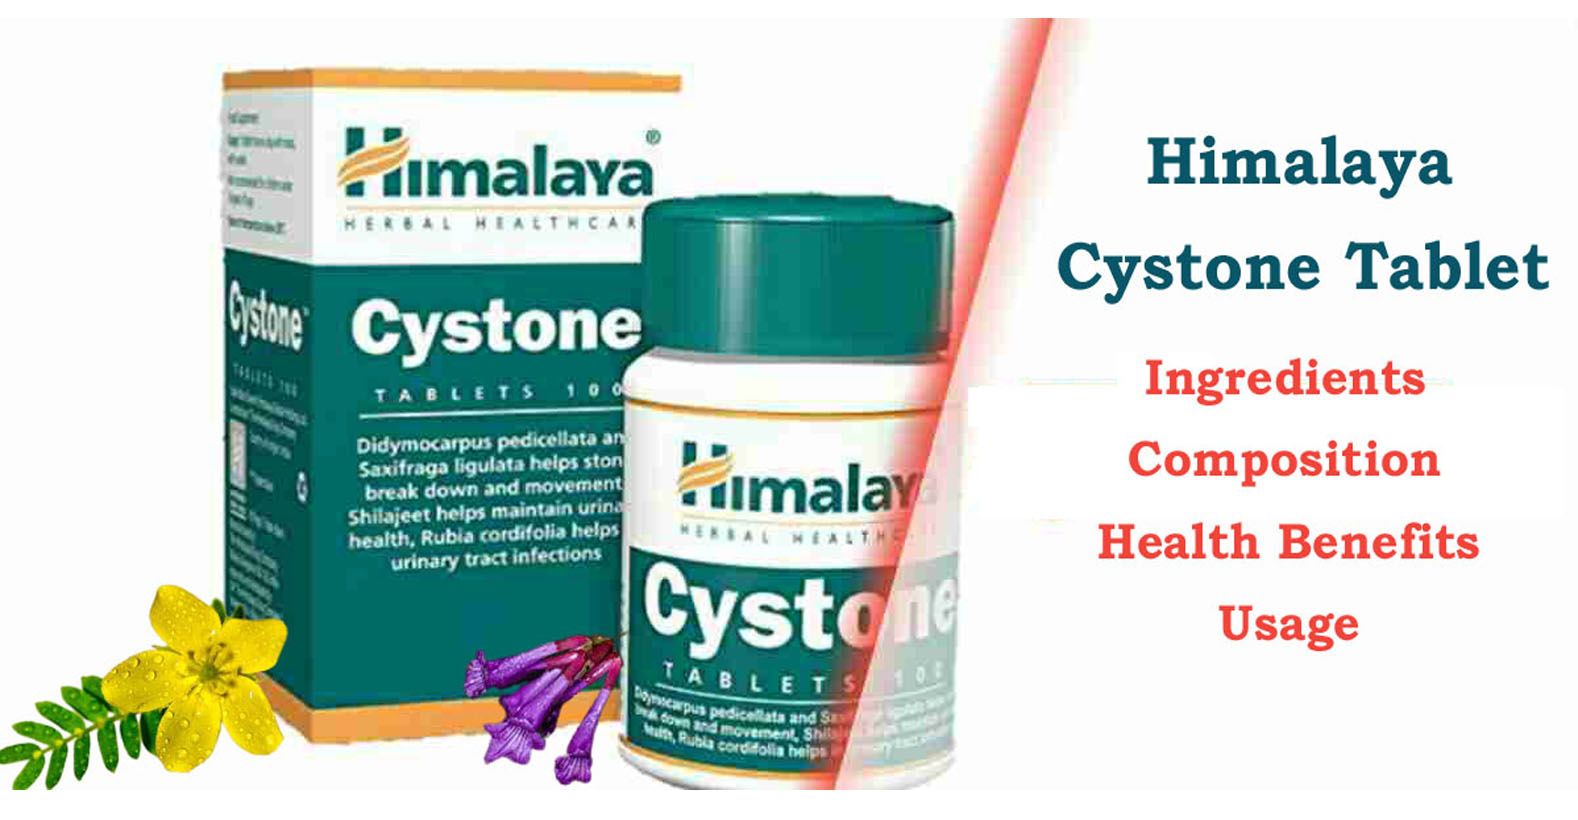 Himalaya Cystone Tablet - Ingredients, Composition, Health Benefits, Usage